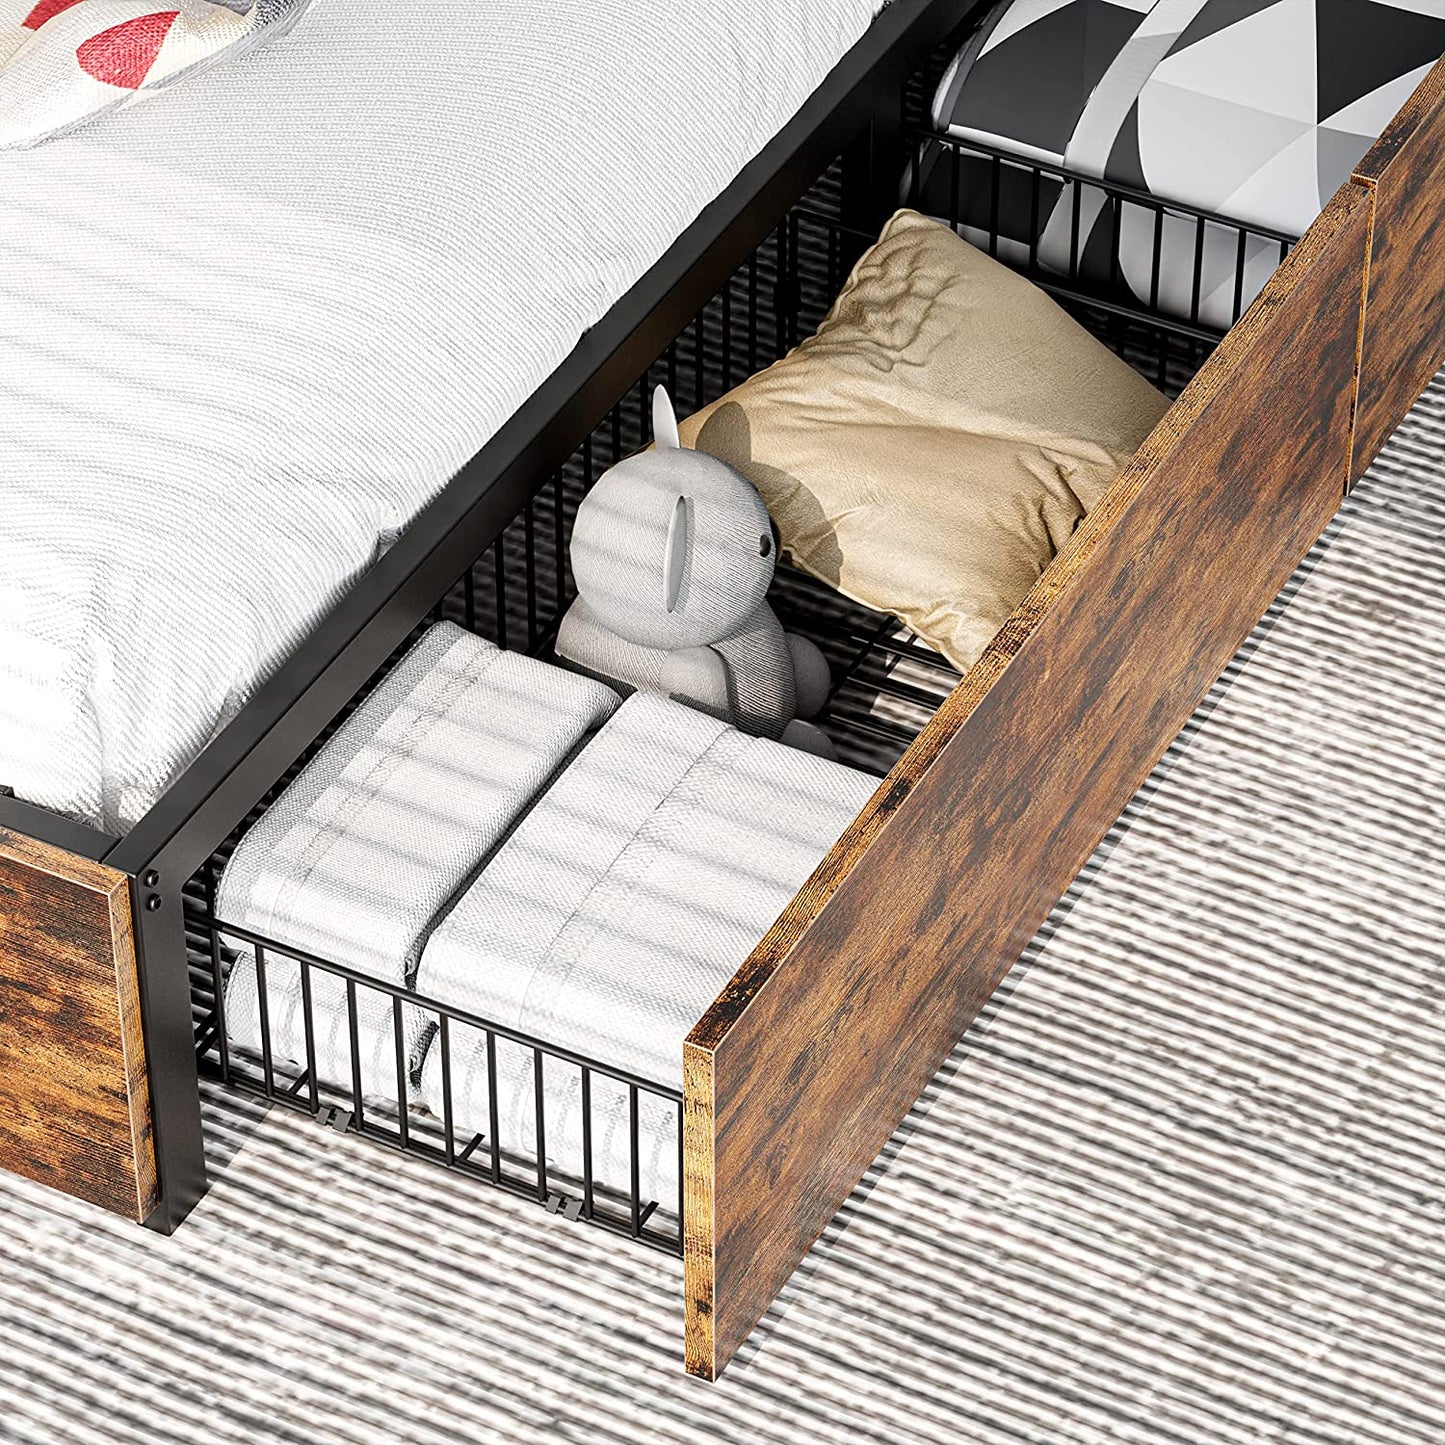 [SALE $150] 4 Drawers Storage Platform Queen Bed Frame